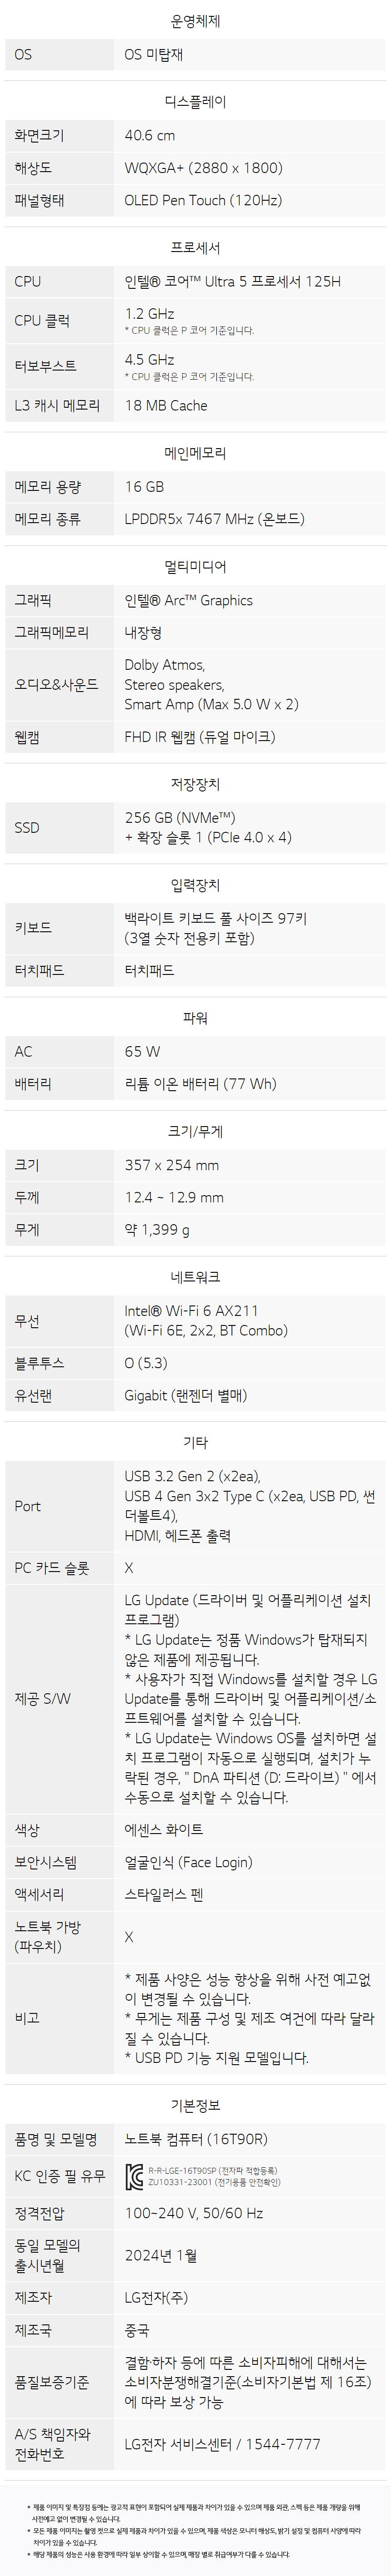 LG그램 2024 신제품 16인치 포토샵 일러스트 투인원 윈도우 터치 태블릿 360도 노트북 프로 360